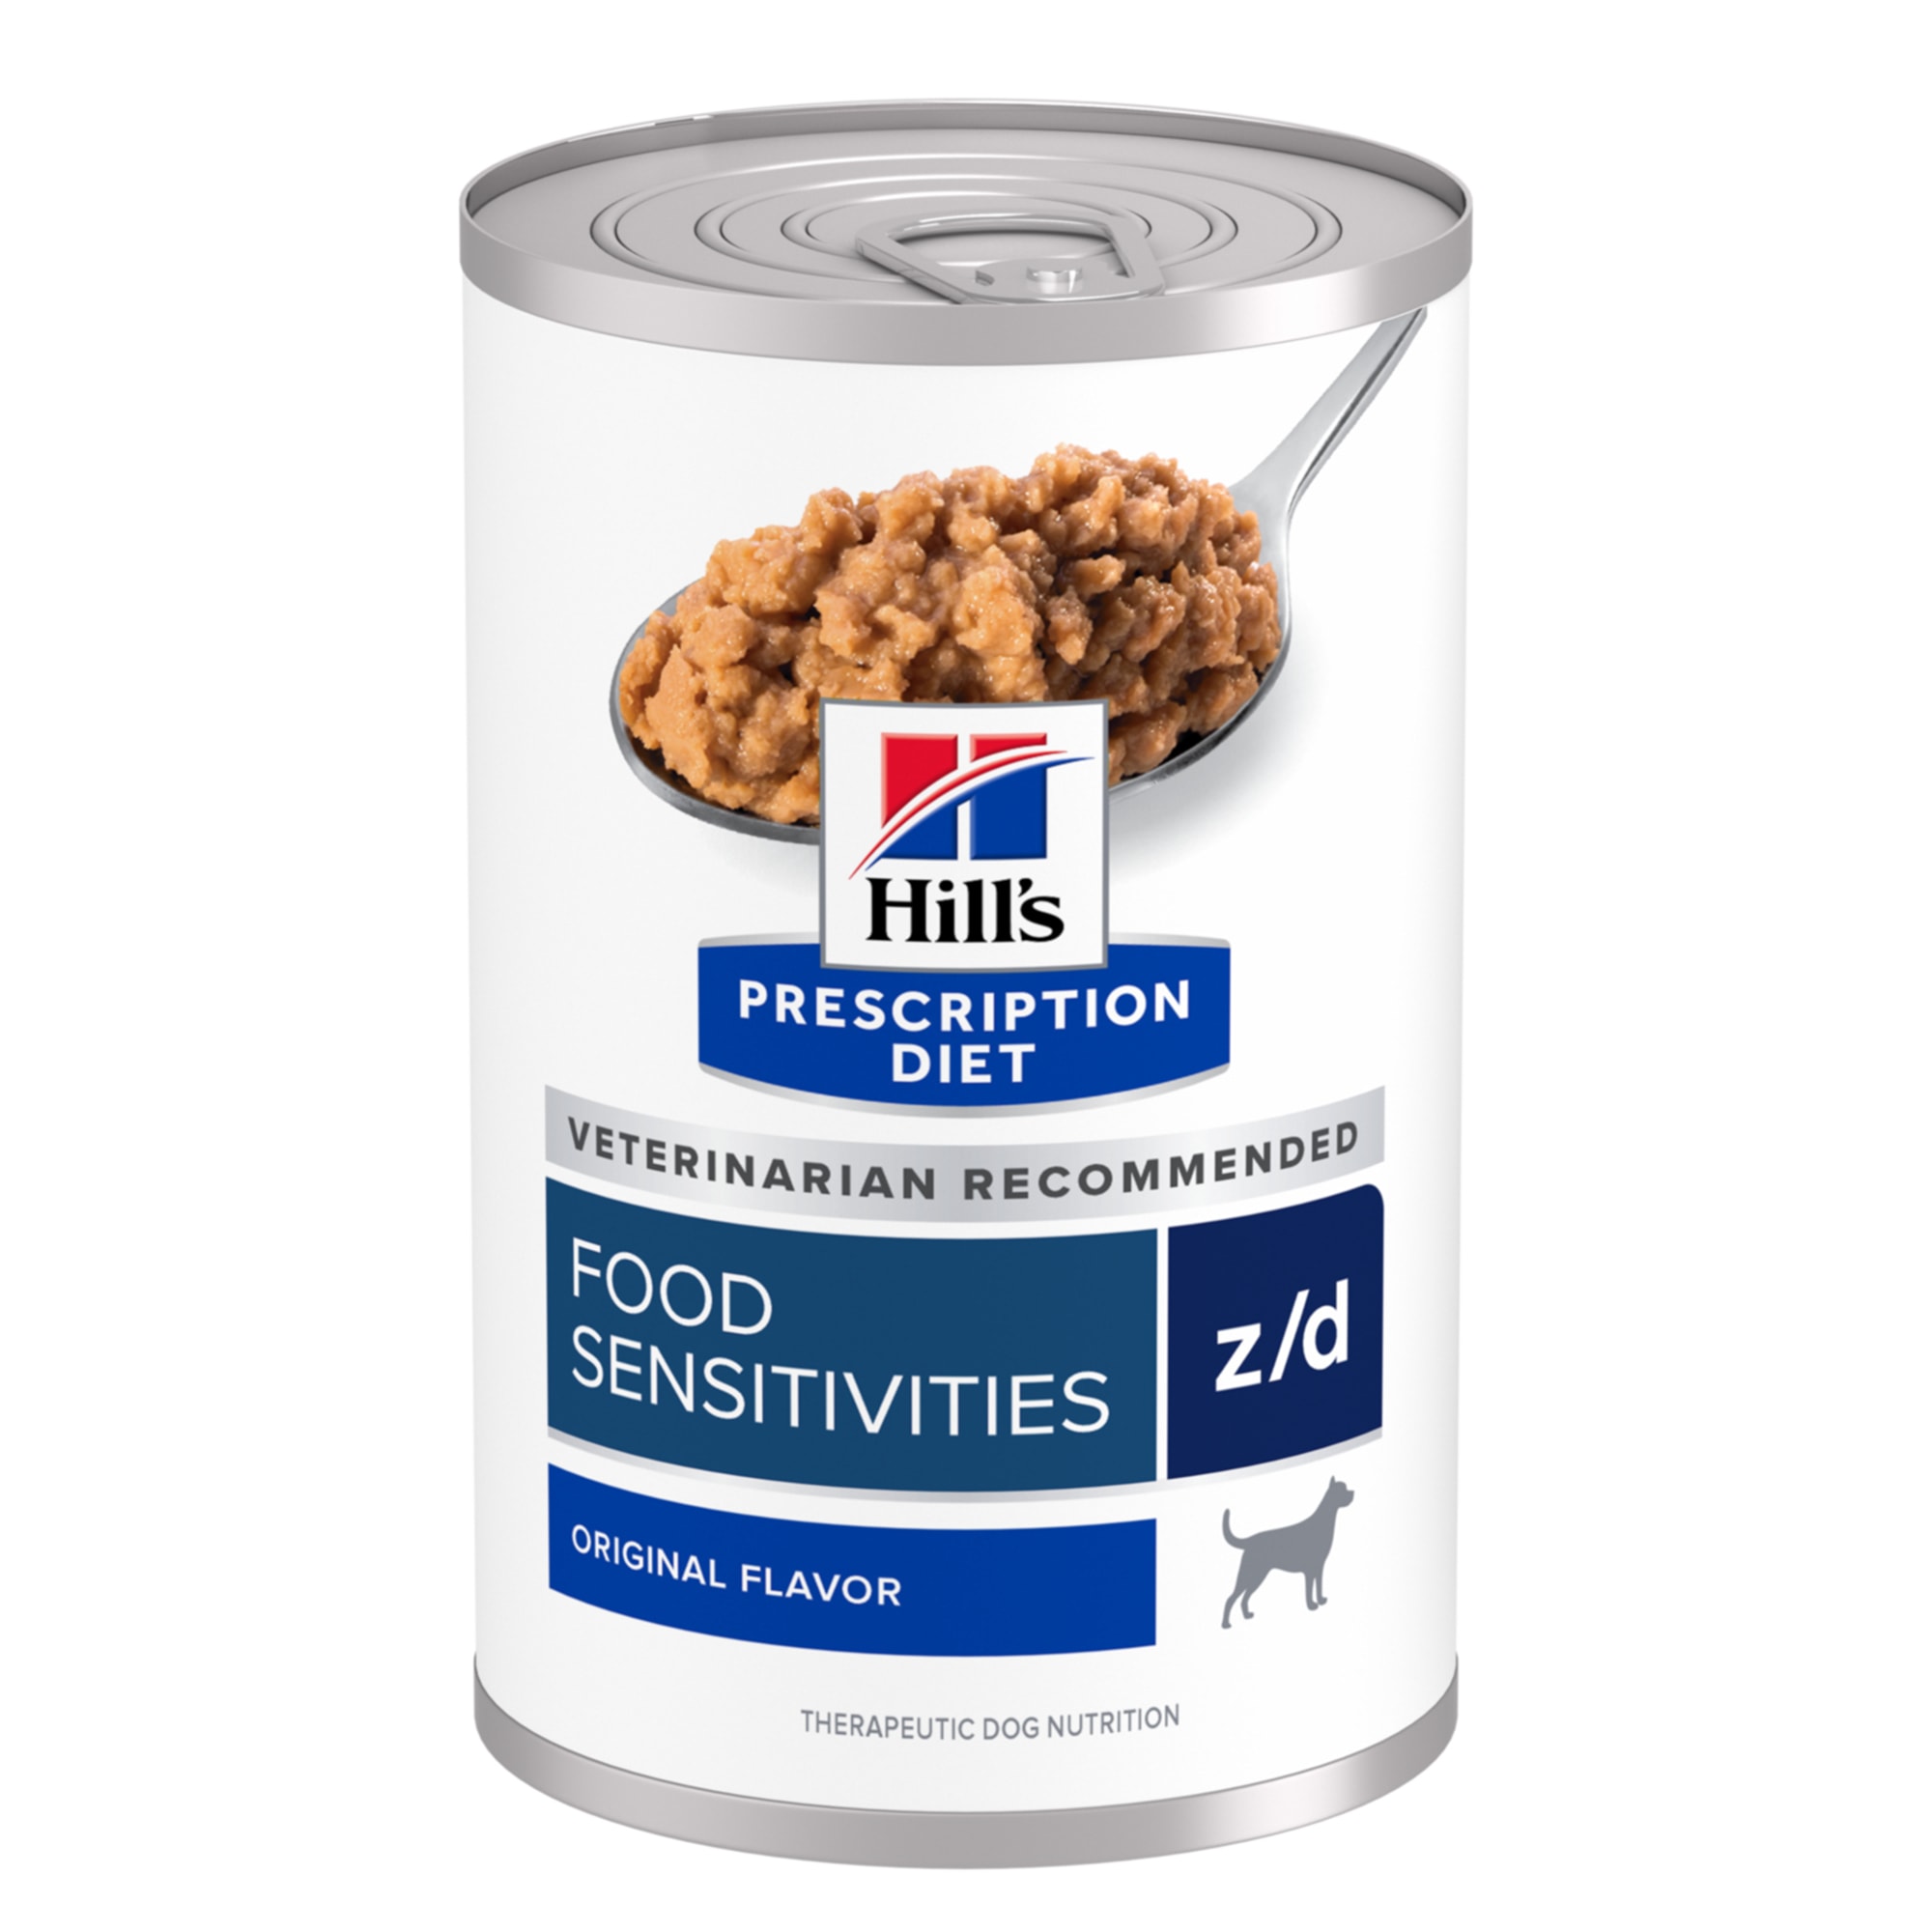 hills prescription diet zd dog food